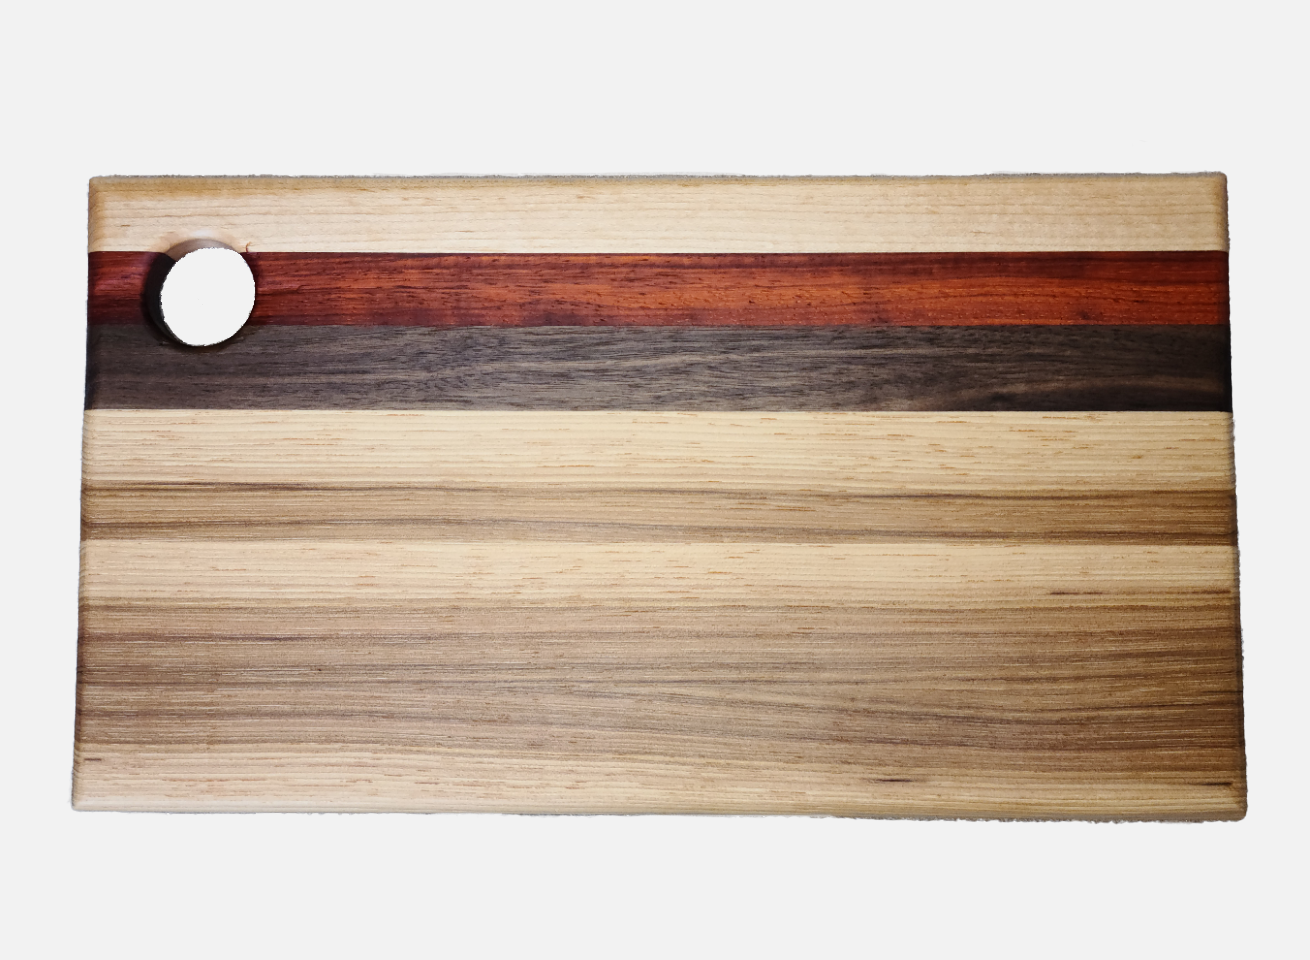 Hardwood cutting board and charcuterie board sets